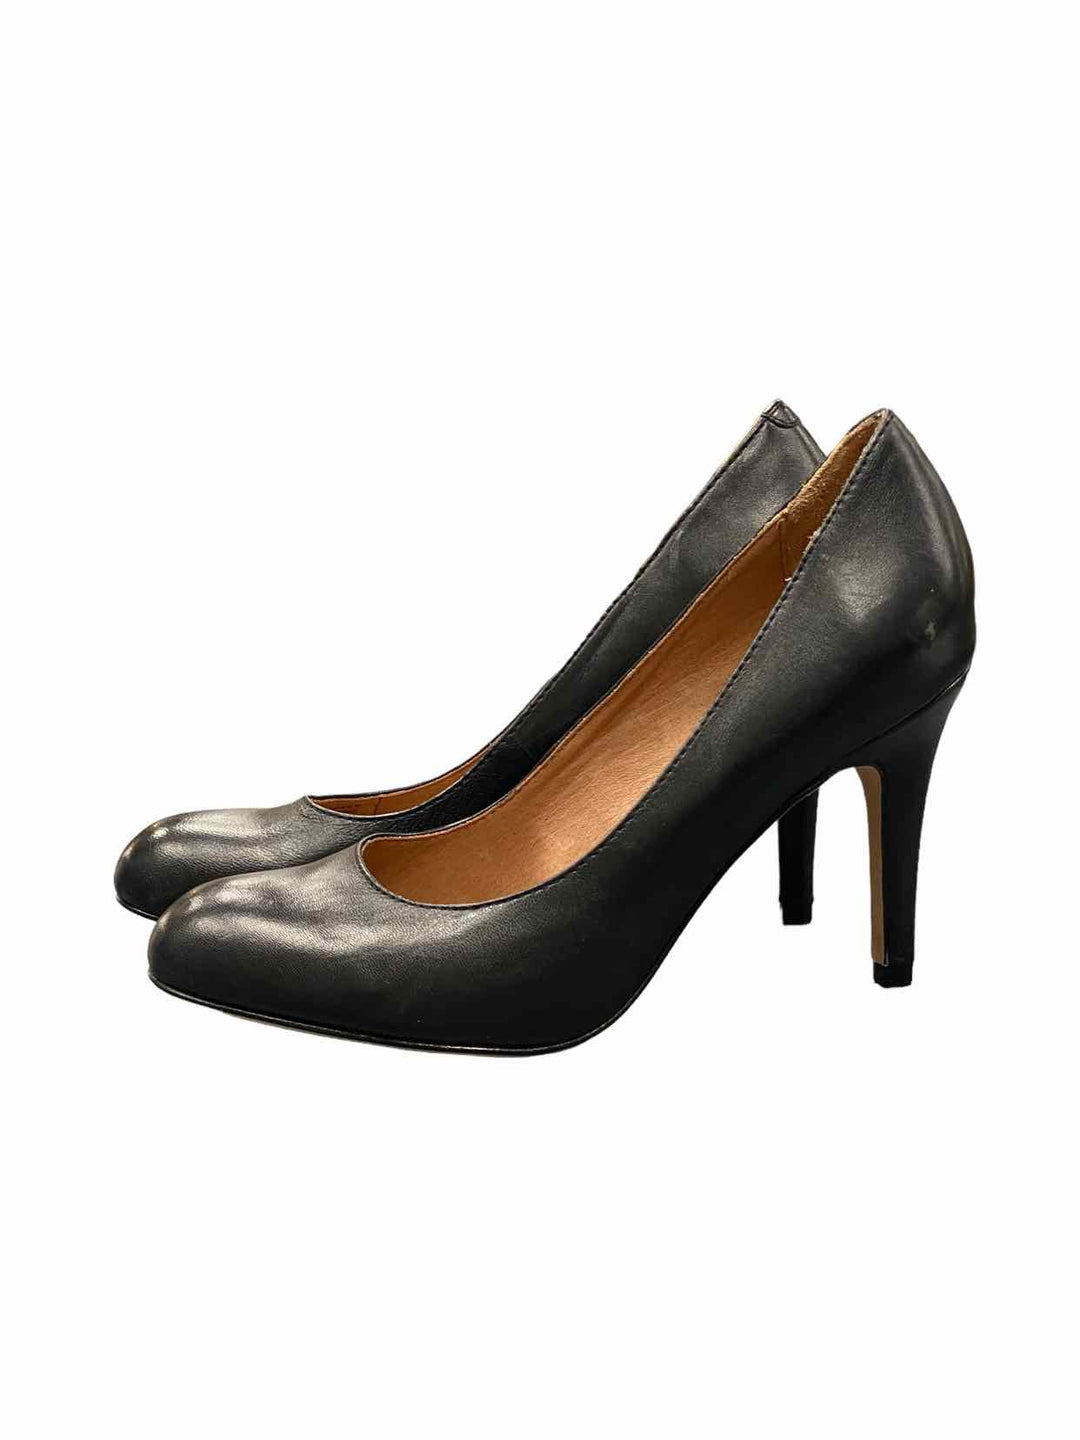 Corso Como Shoe Size 7 Black Leather Heels